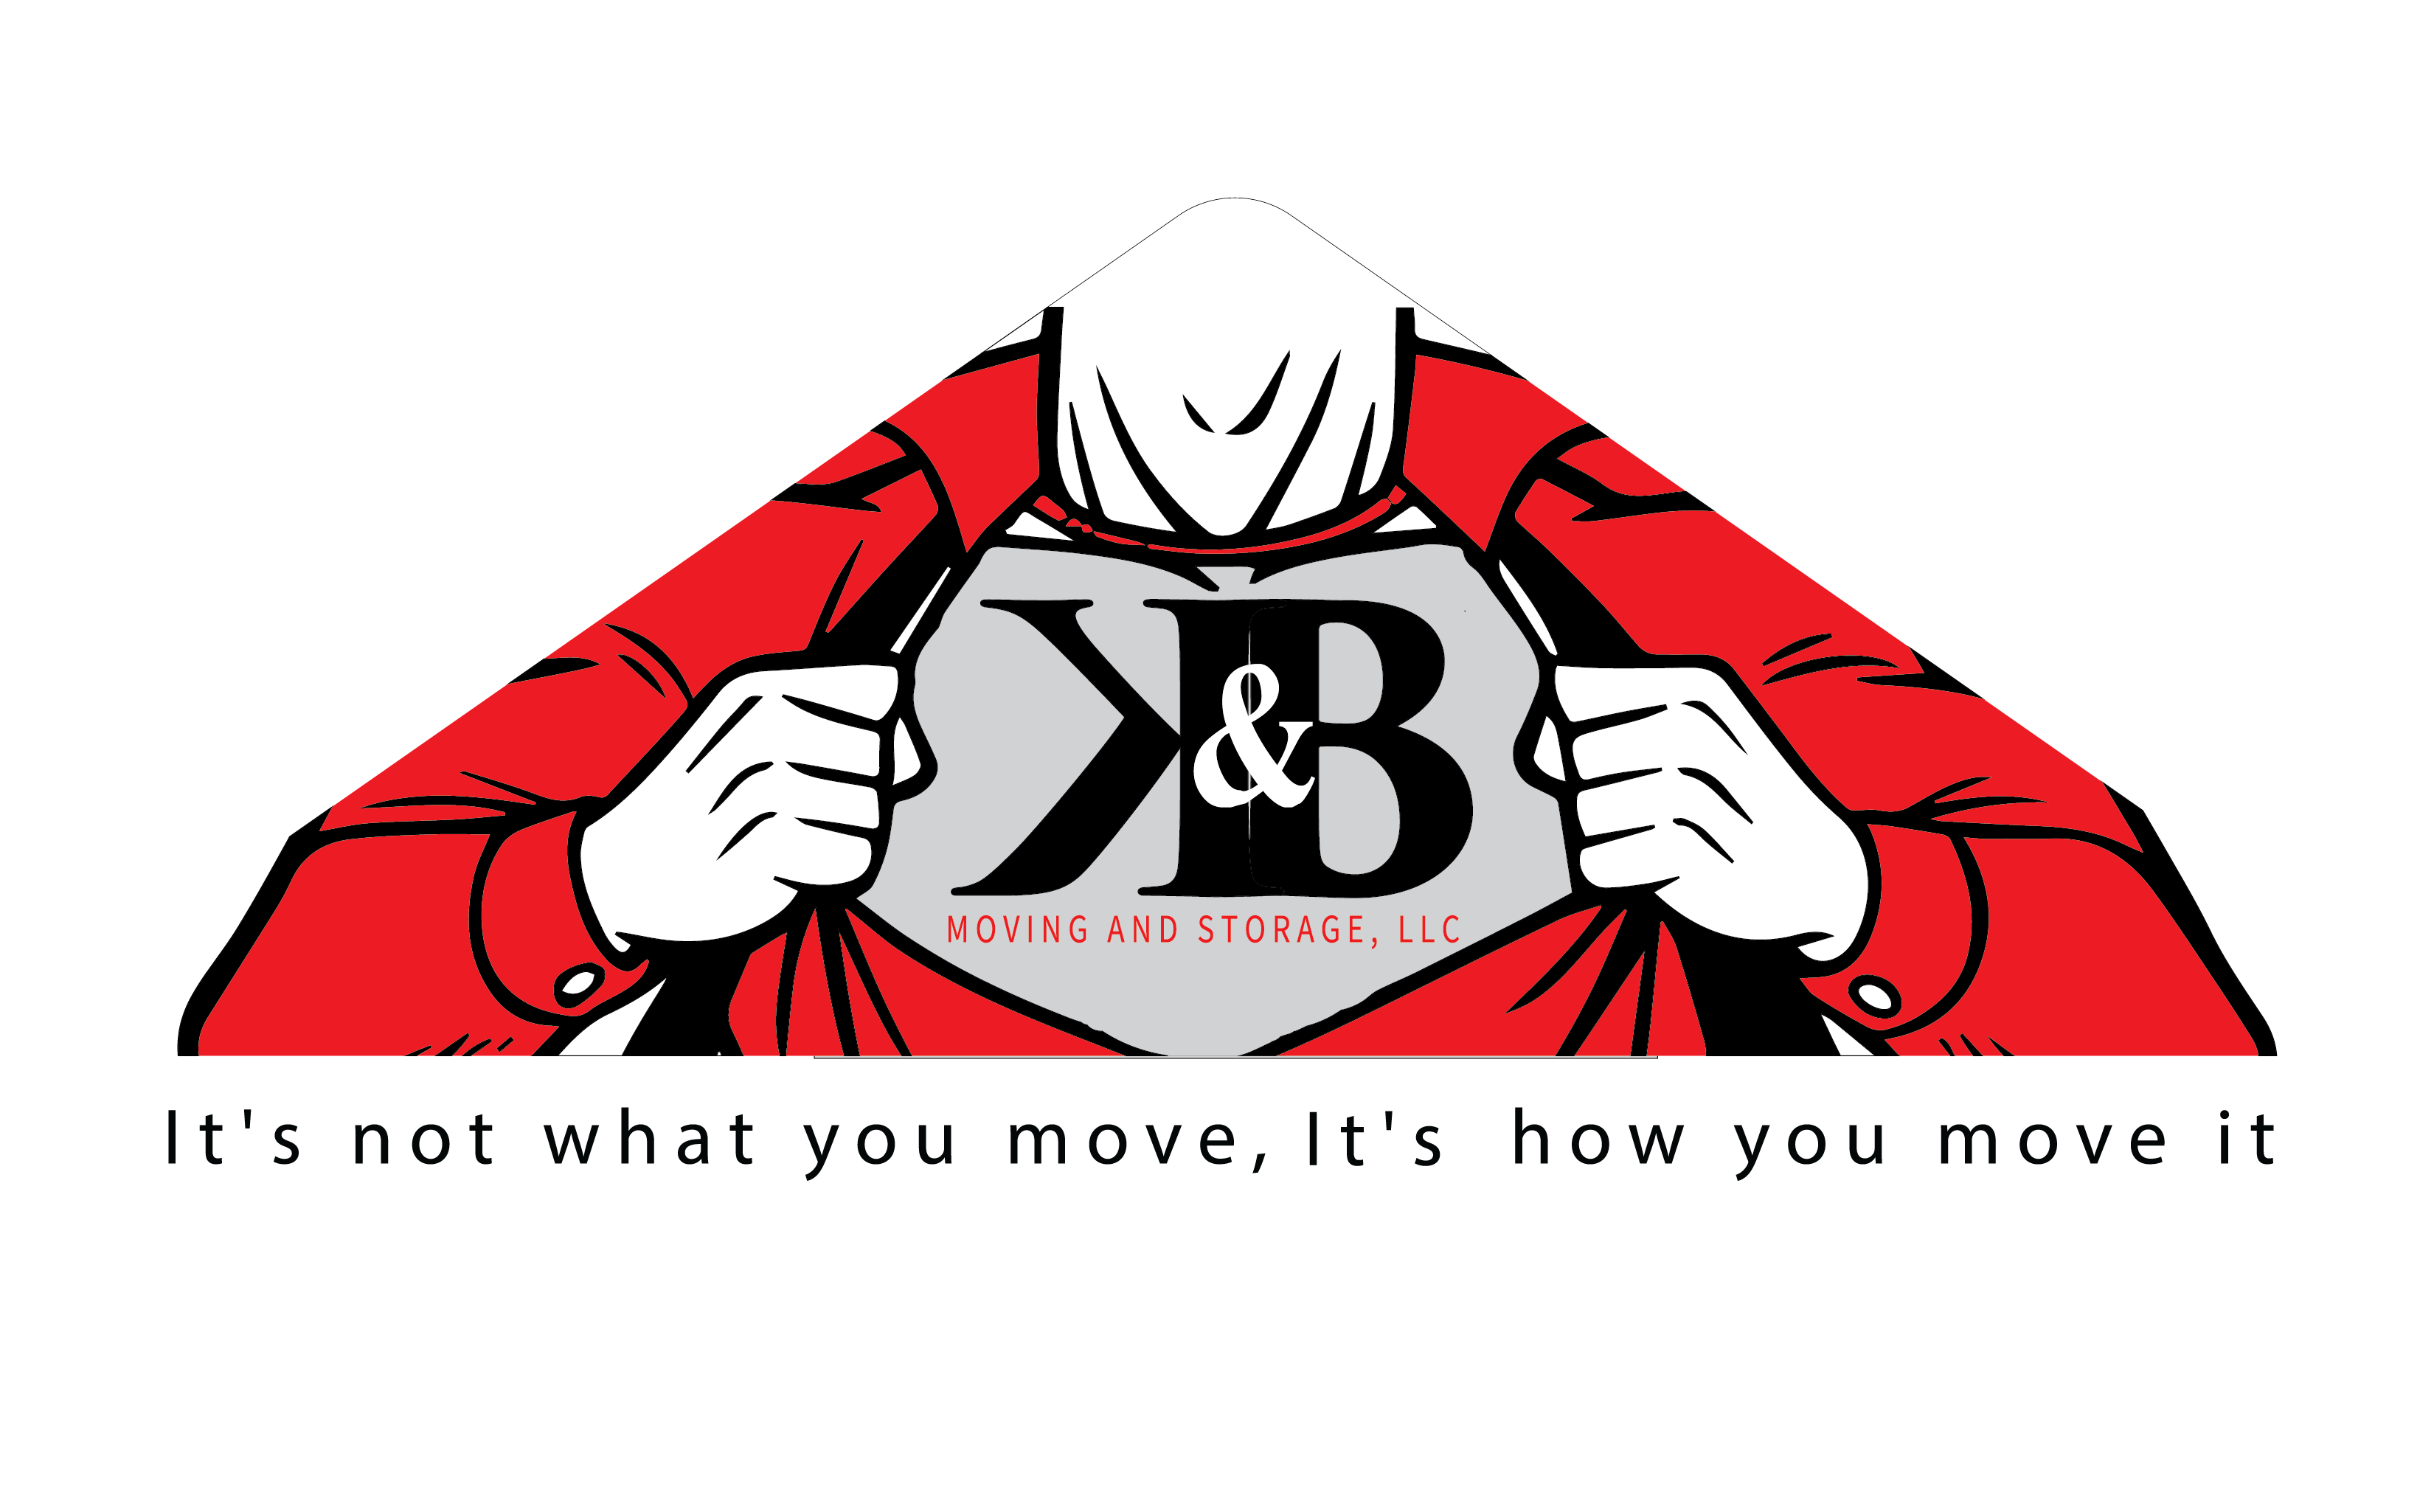 K&B Moving and Storage, LLC